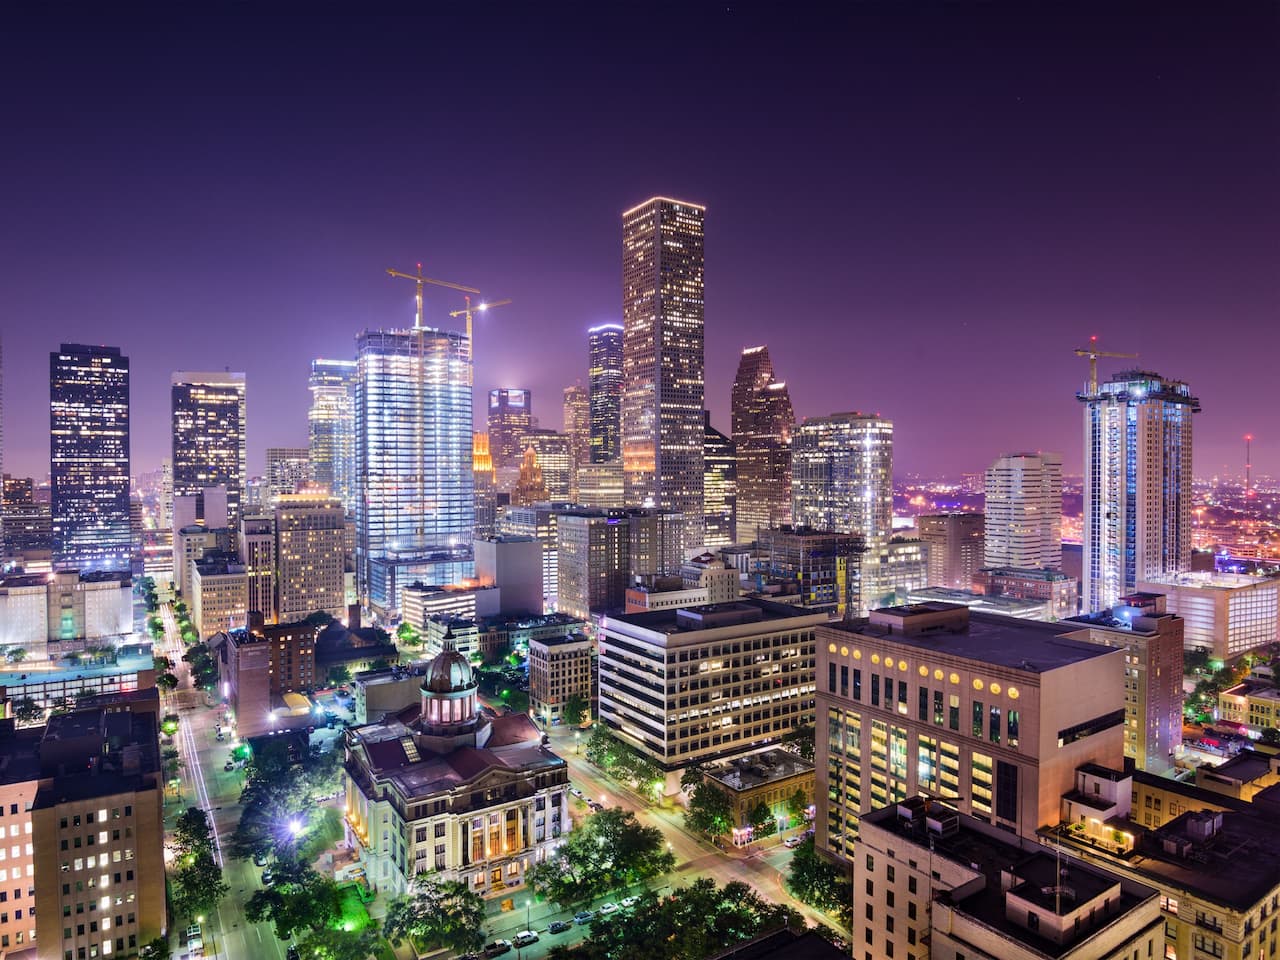 Houston at night